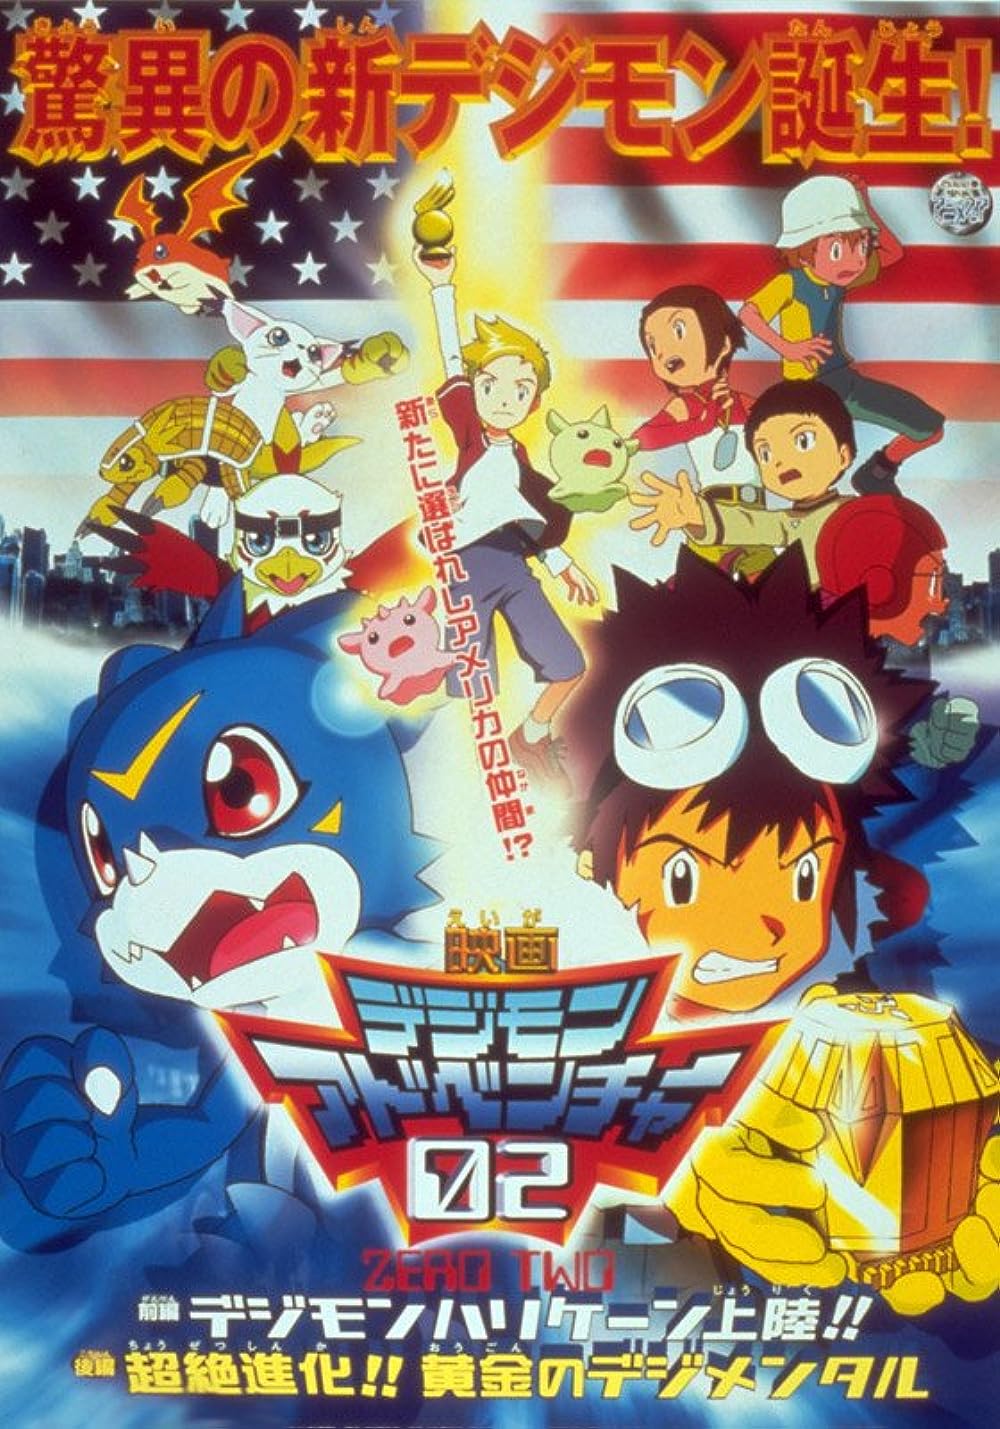 New Digimon Adventure 02 Movie, Digimon Ghost Game Series Announced